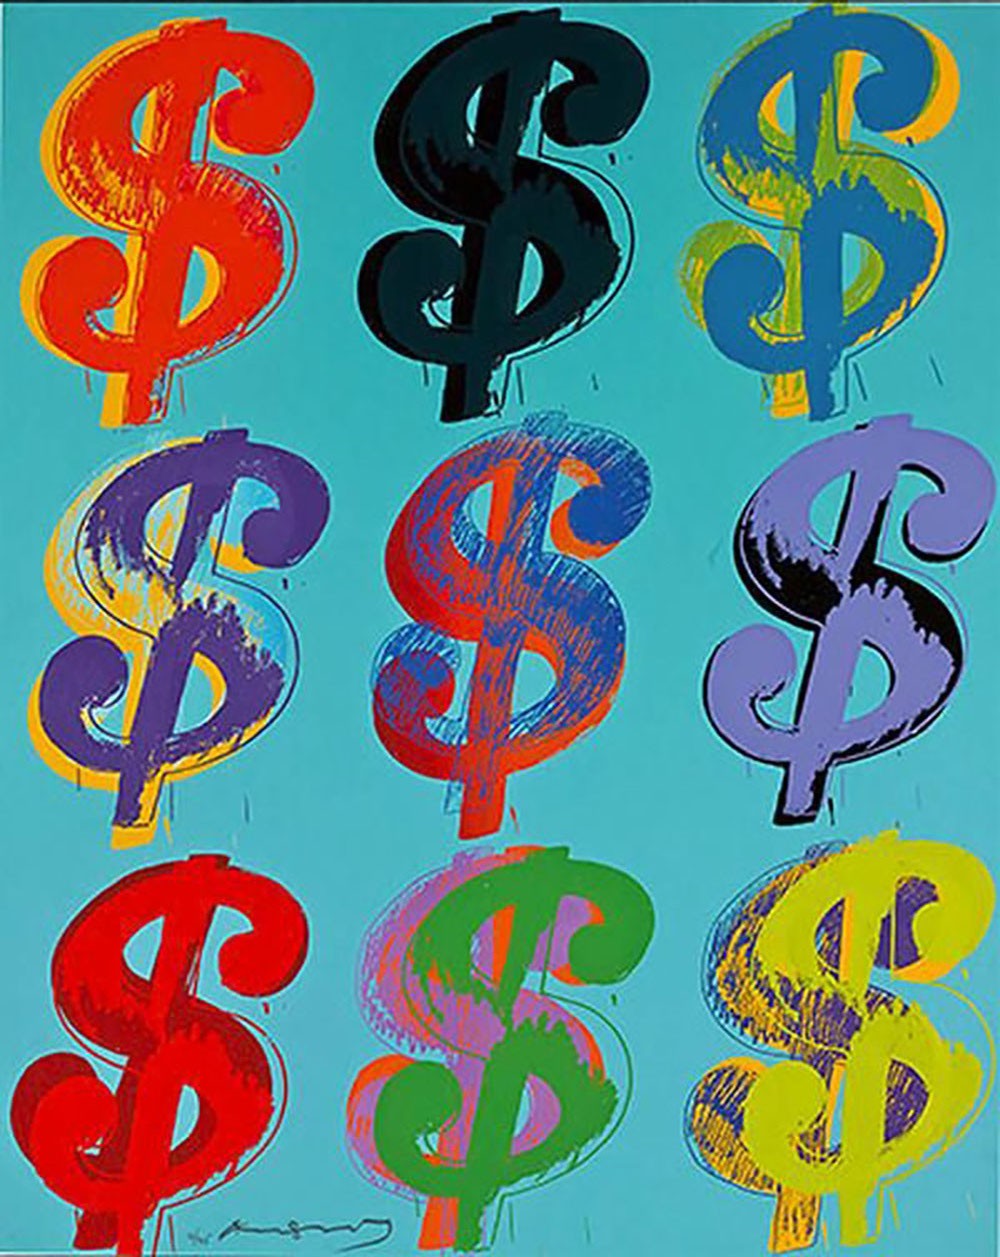 Andy Warhol | 1 piece dollar sign Portfolio | 1982 | Hamilton-Selway